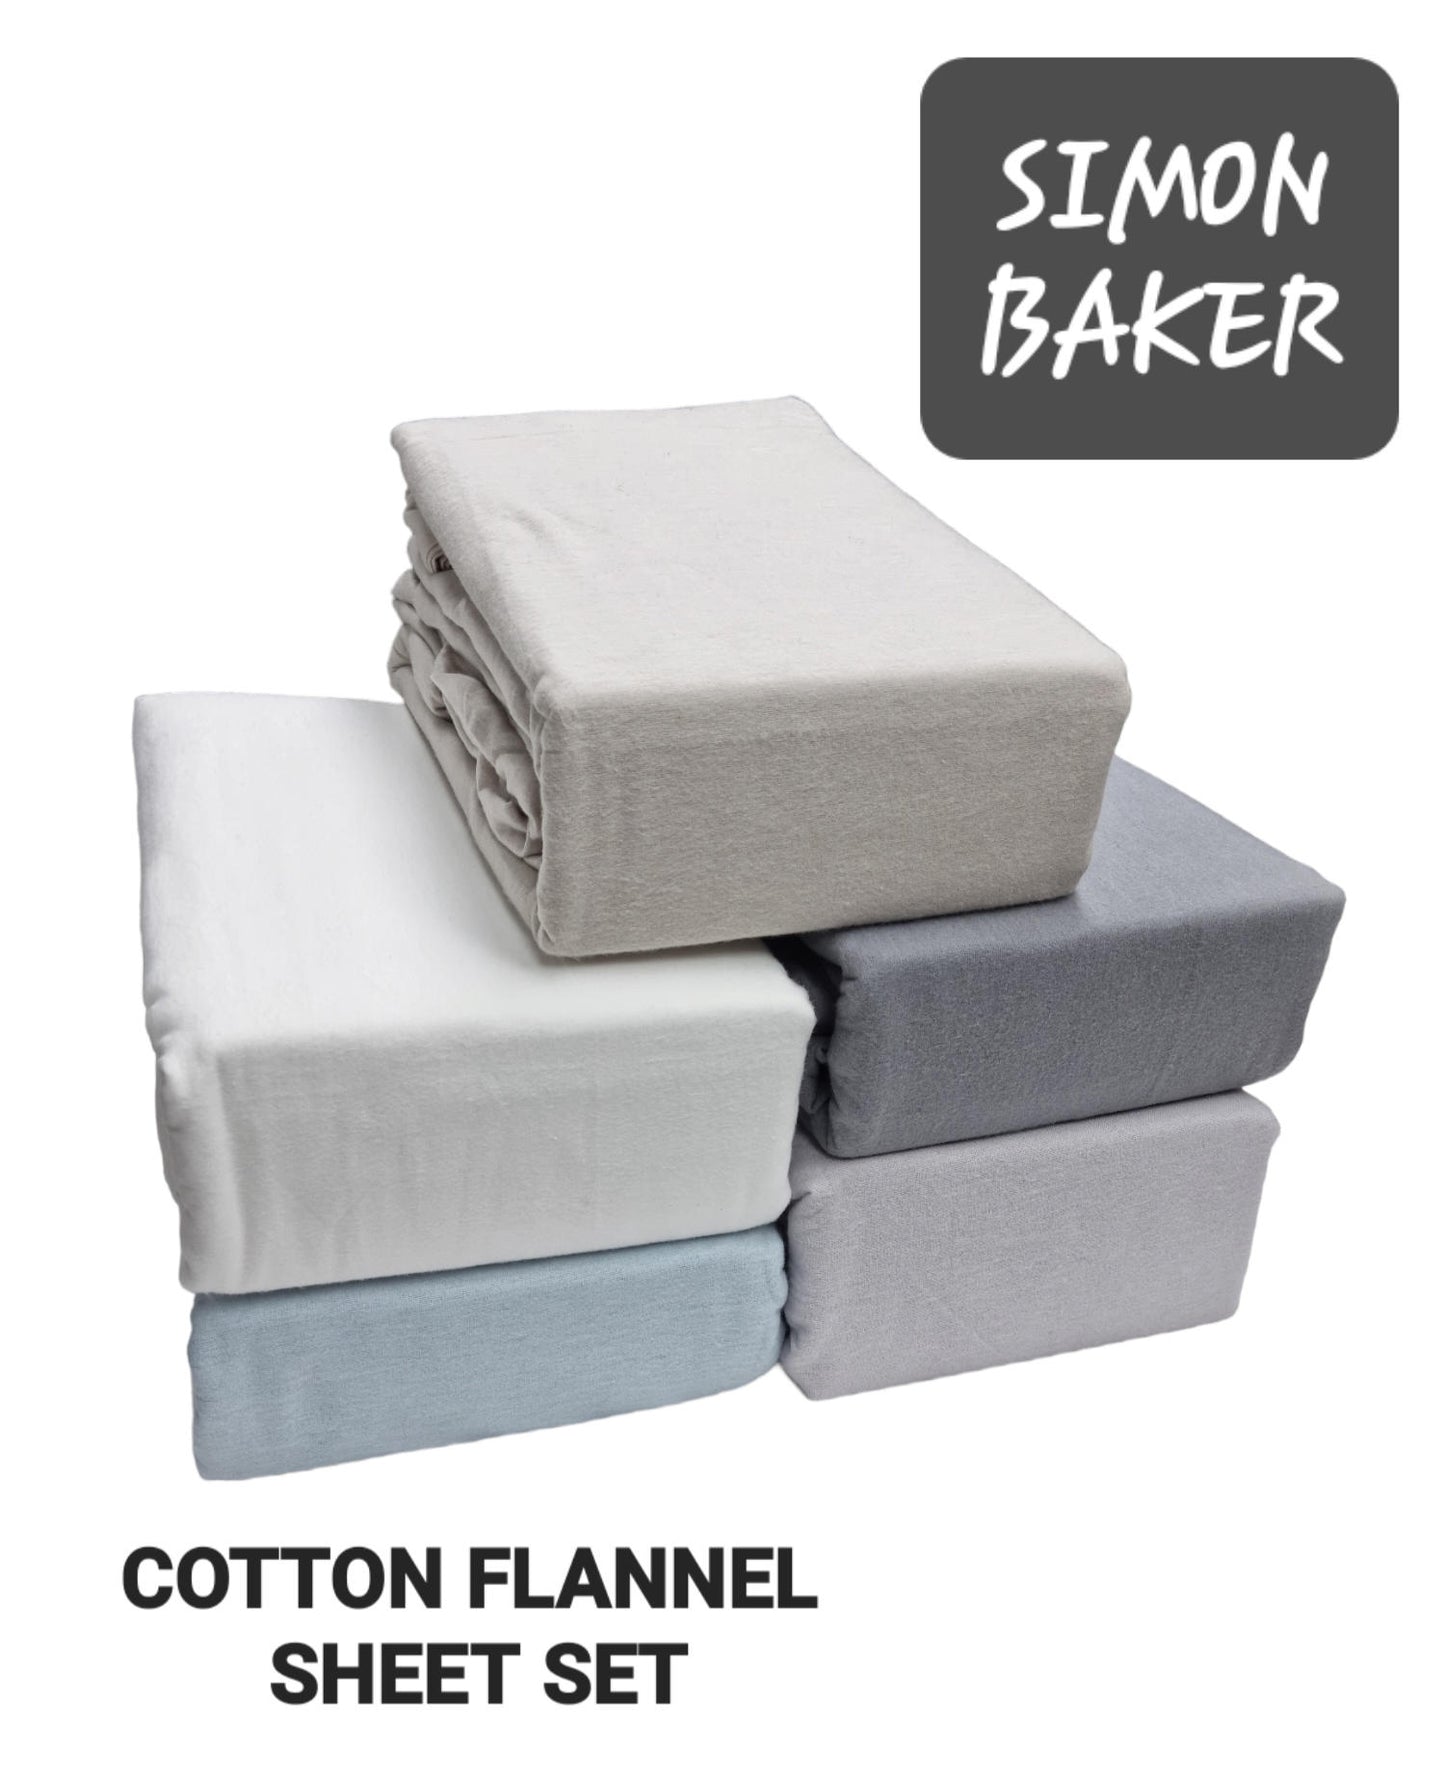 Simon Baker - Cotton Flannel Sheet Set - GREY